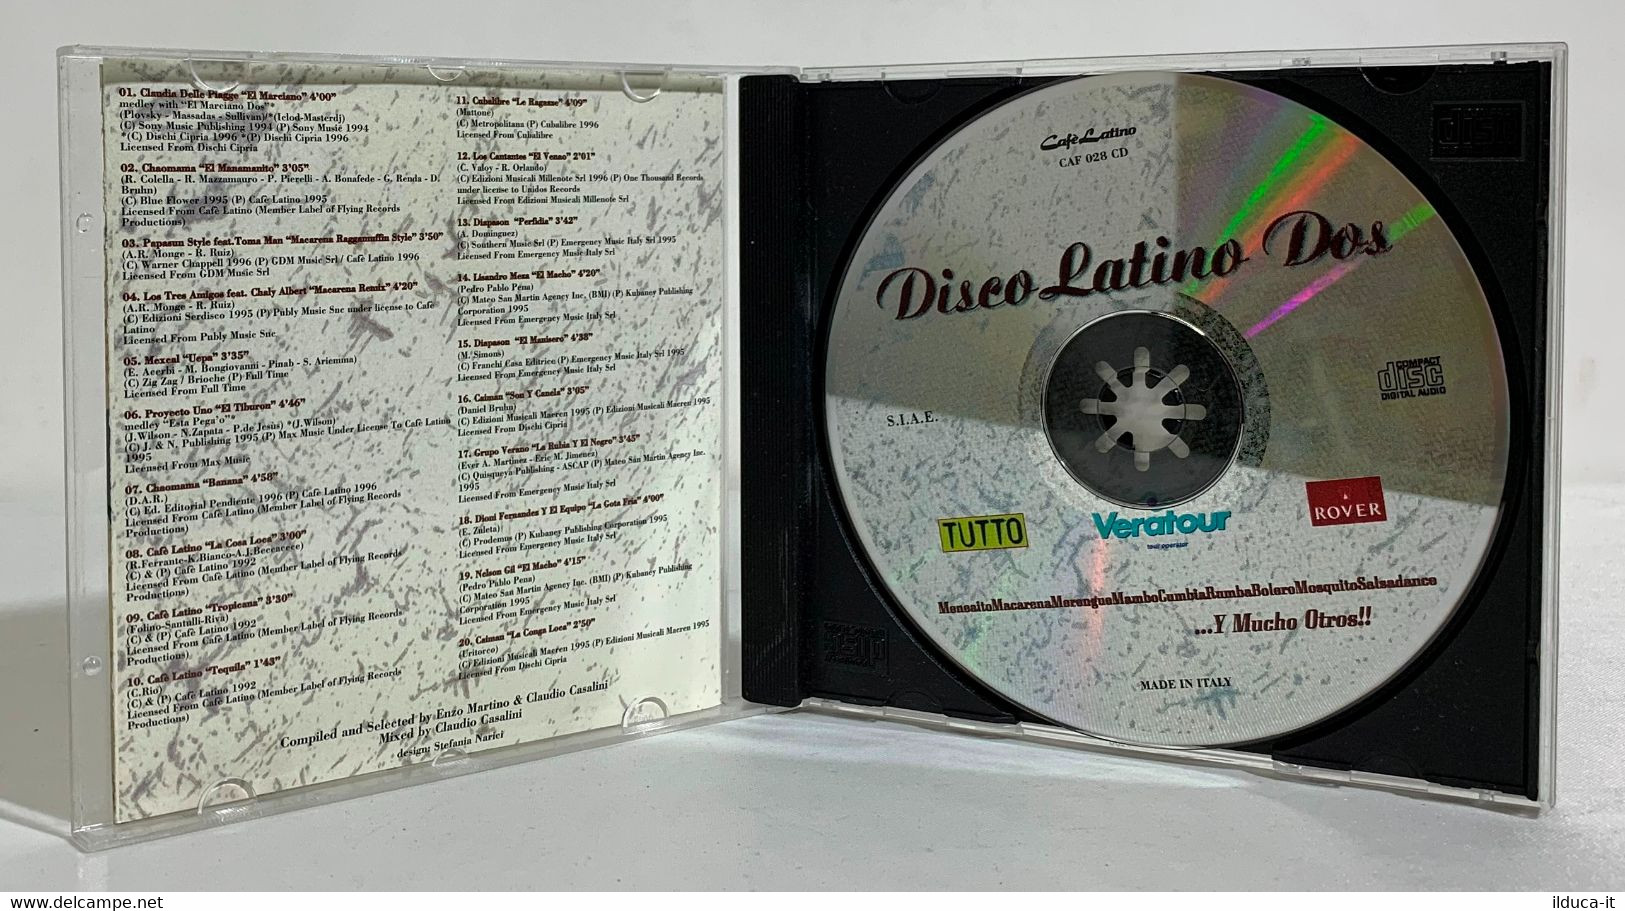 I102388 CD - Claudio Casalini - Disco Latino Dos - Tutto 1995 - Autres - Musique Espagnole